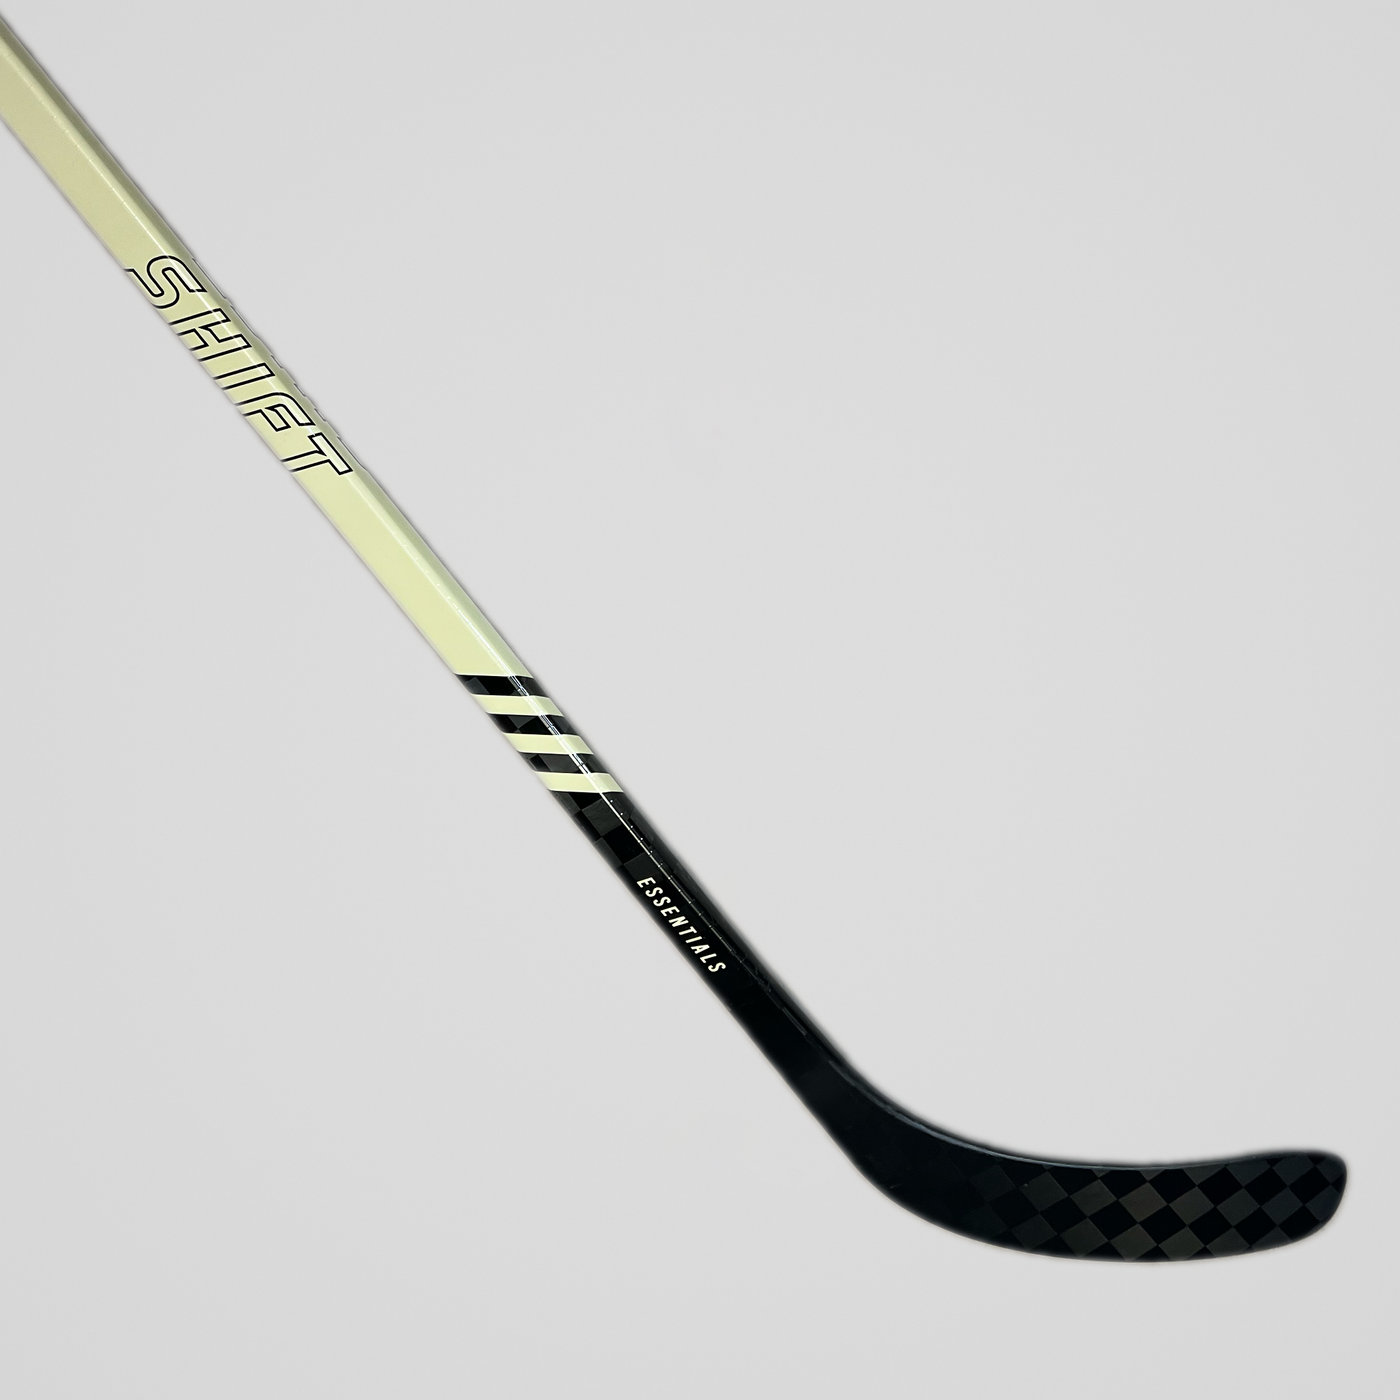 Essentials - Youth Hockey Stick - 52"